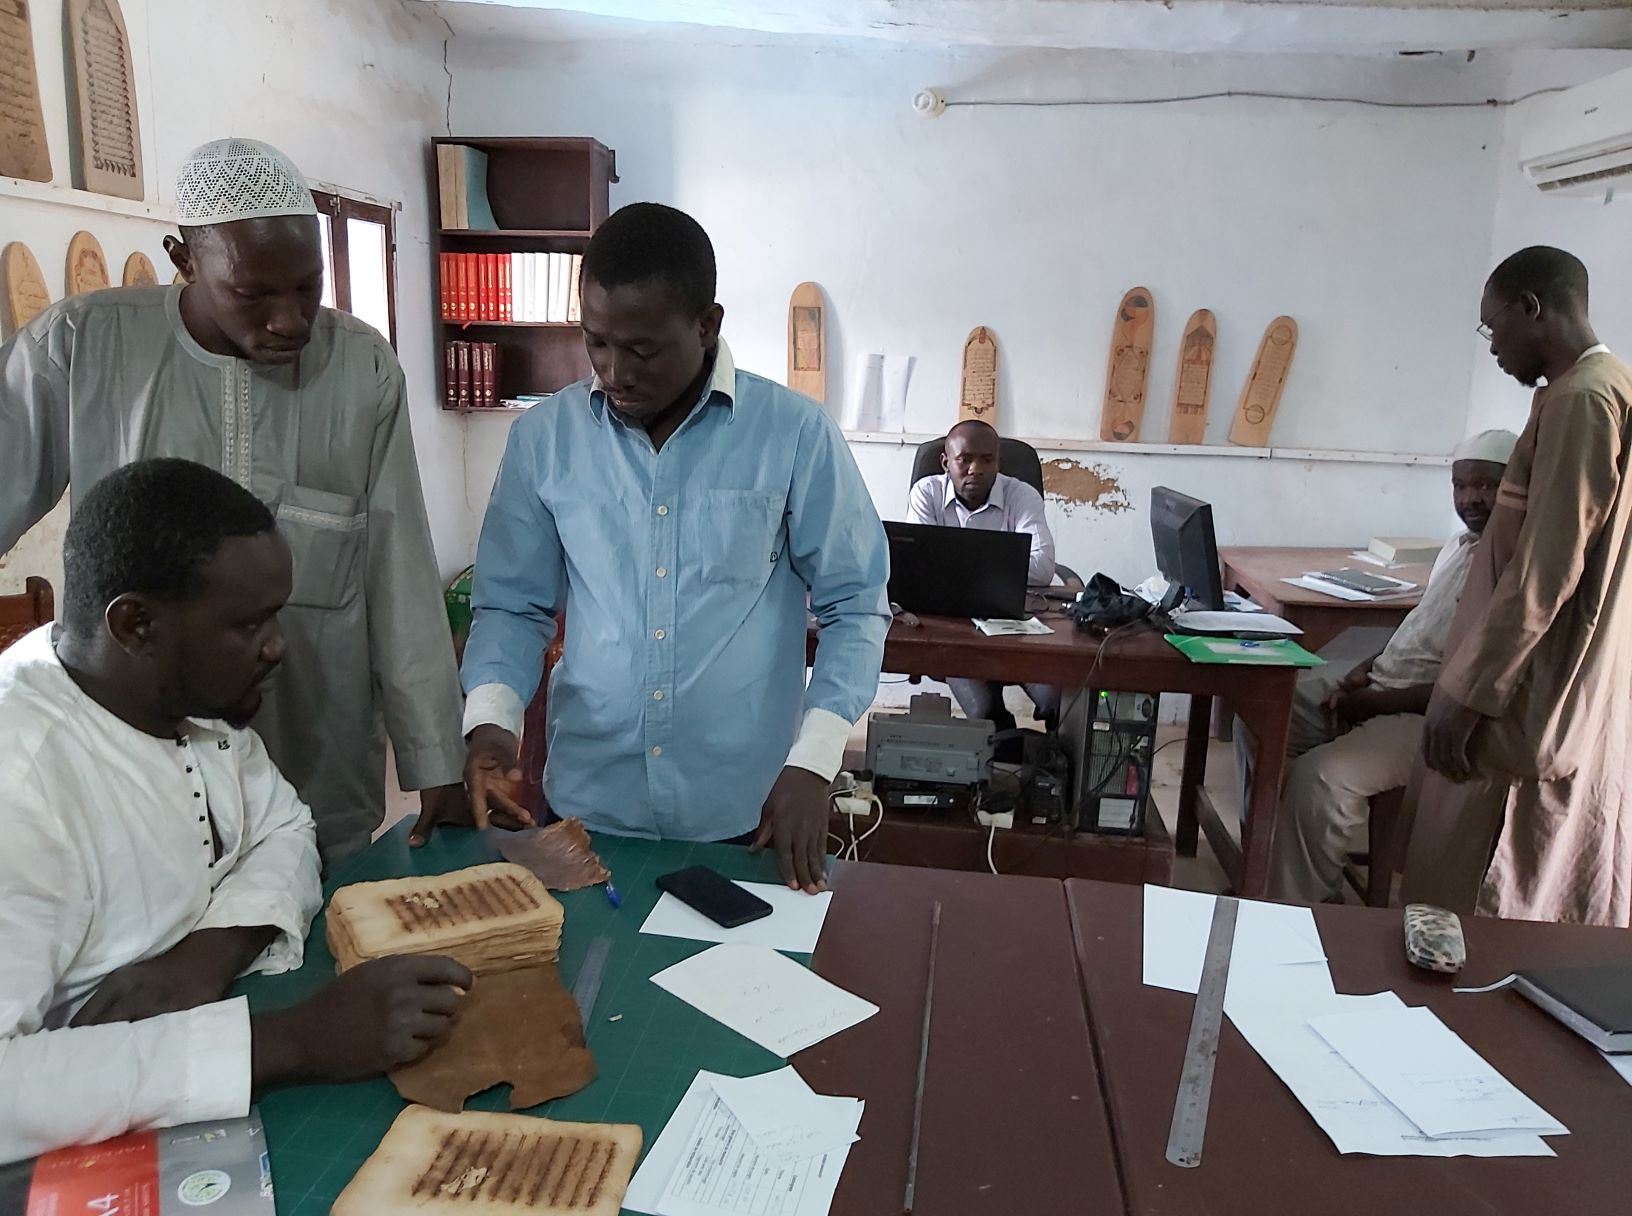 Technicians and archivists at the Djenné Manuscript Library